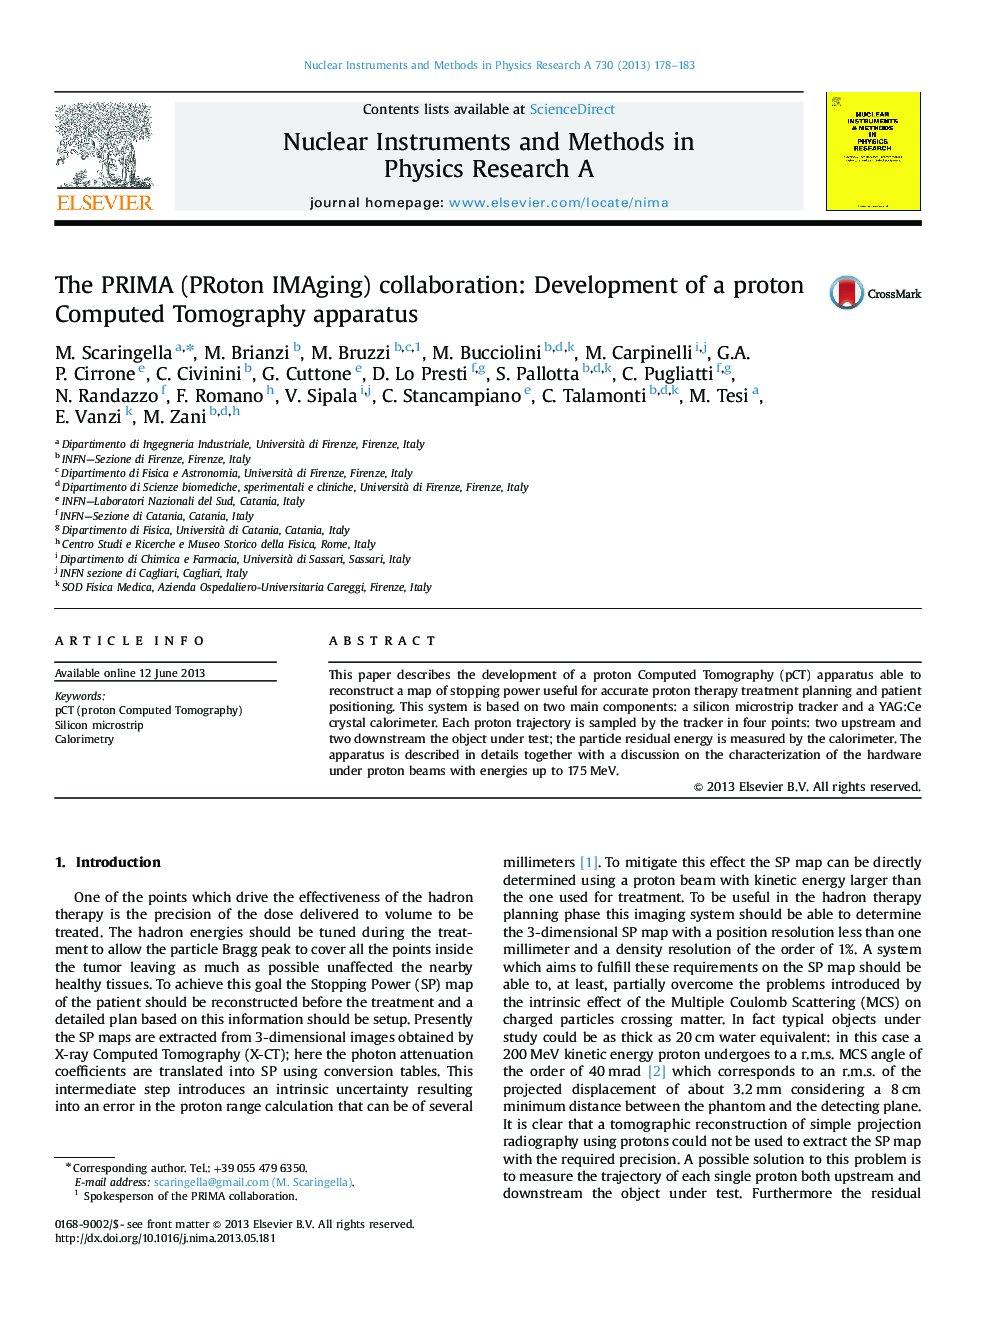 The PRIMA (PRoton IMAging) collaboration: Development of a proton Computed Tomography apparatus